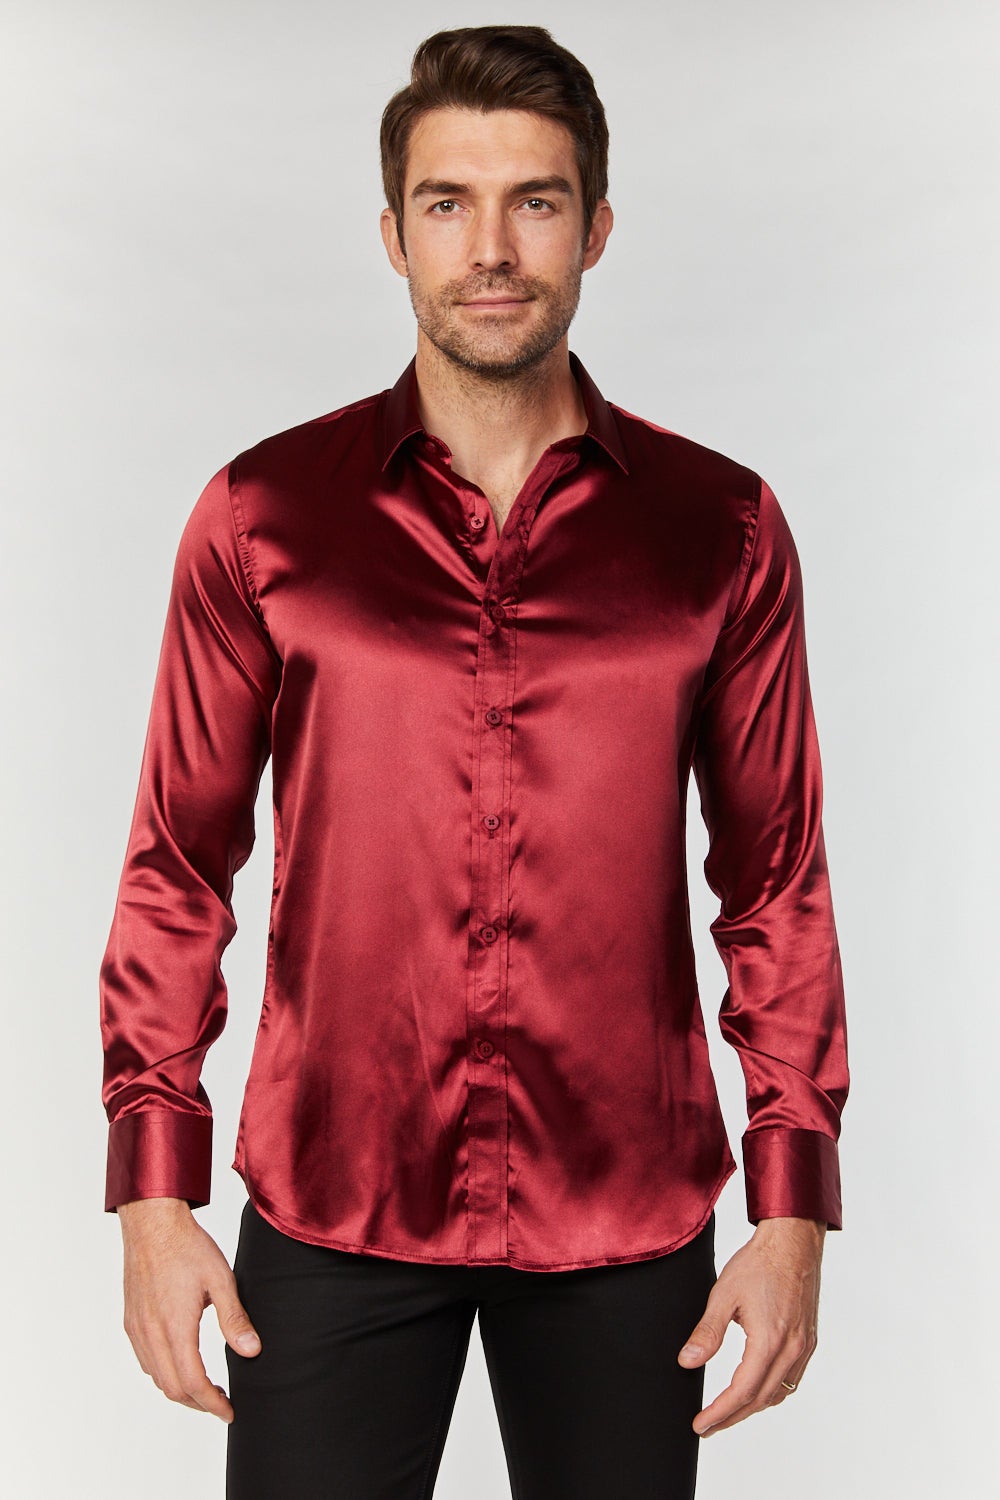 maroon men’s dress shirt